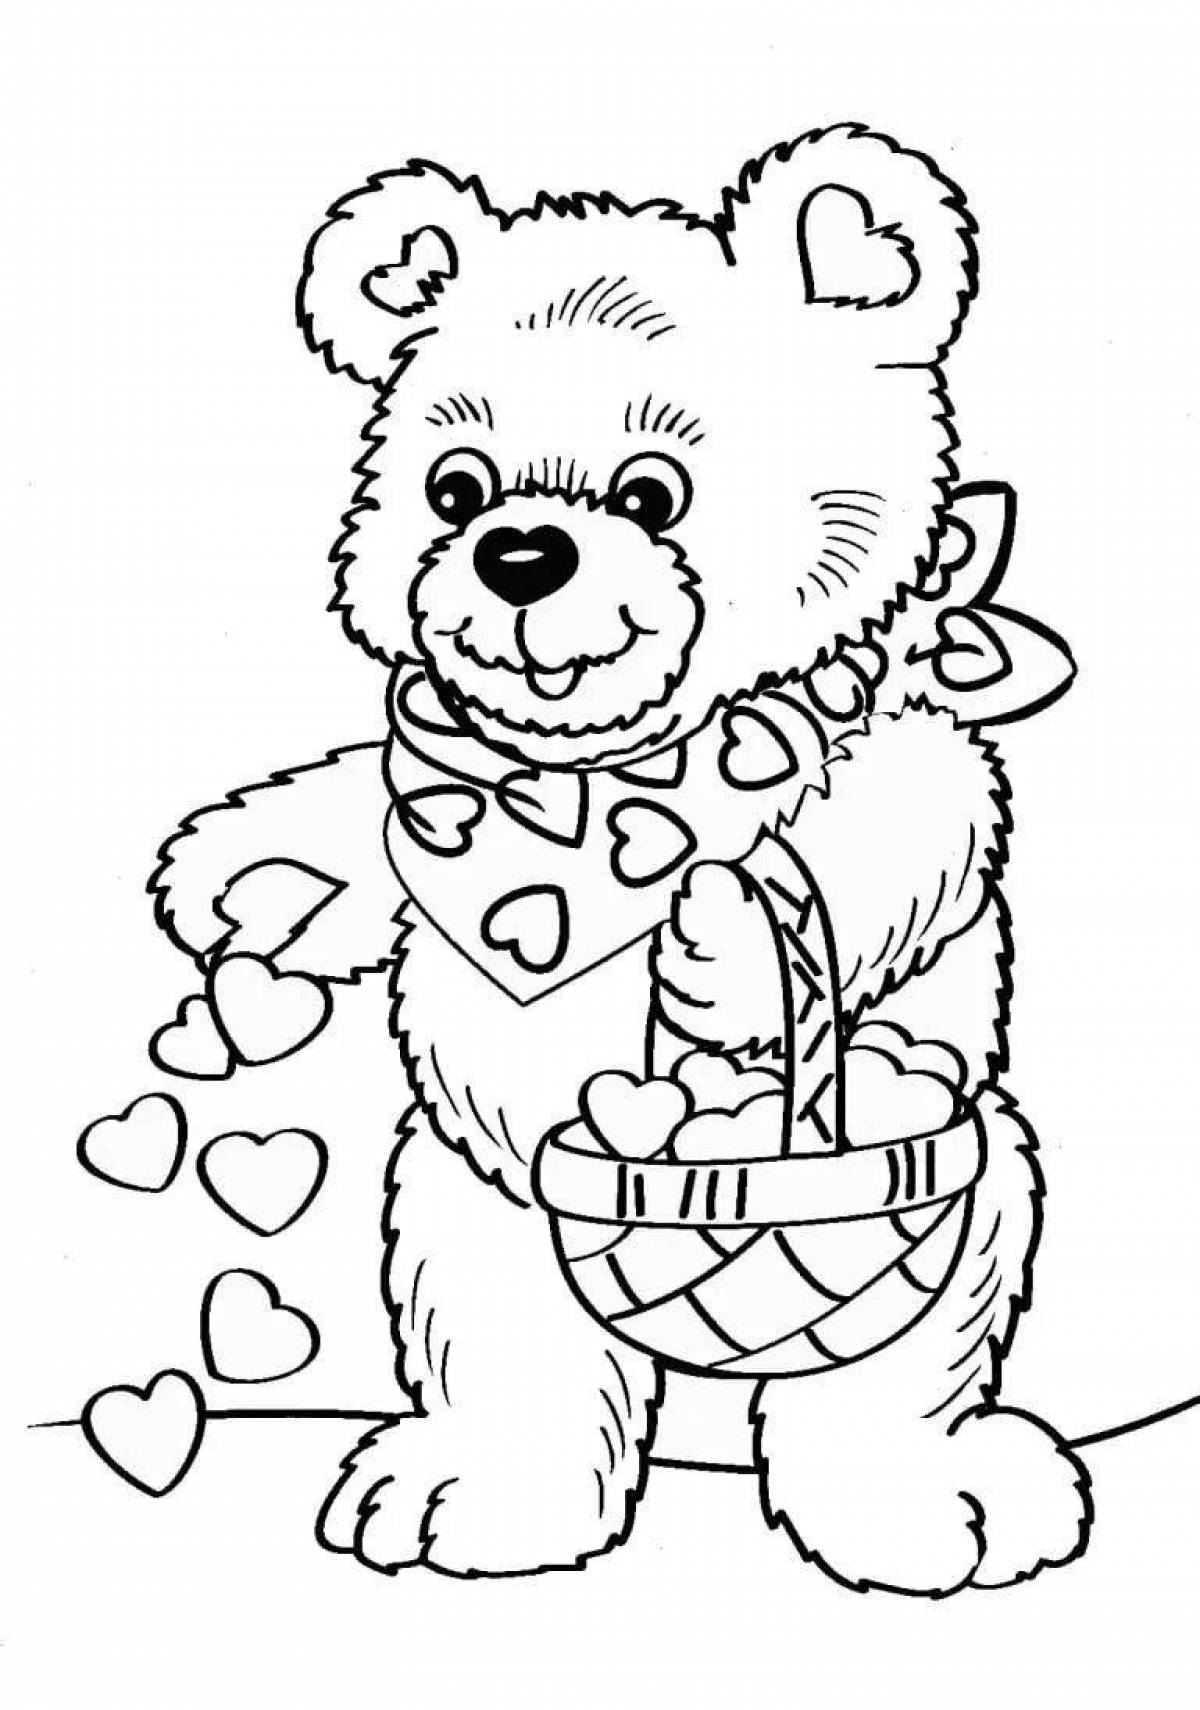 Fancy teddy bear coloring book